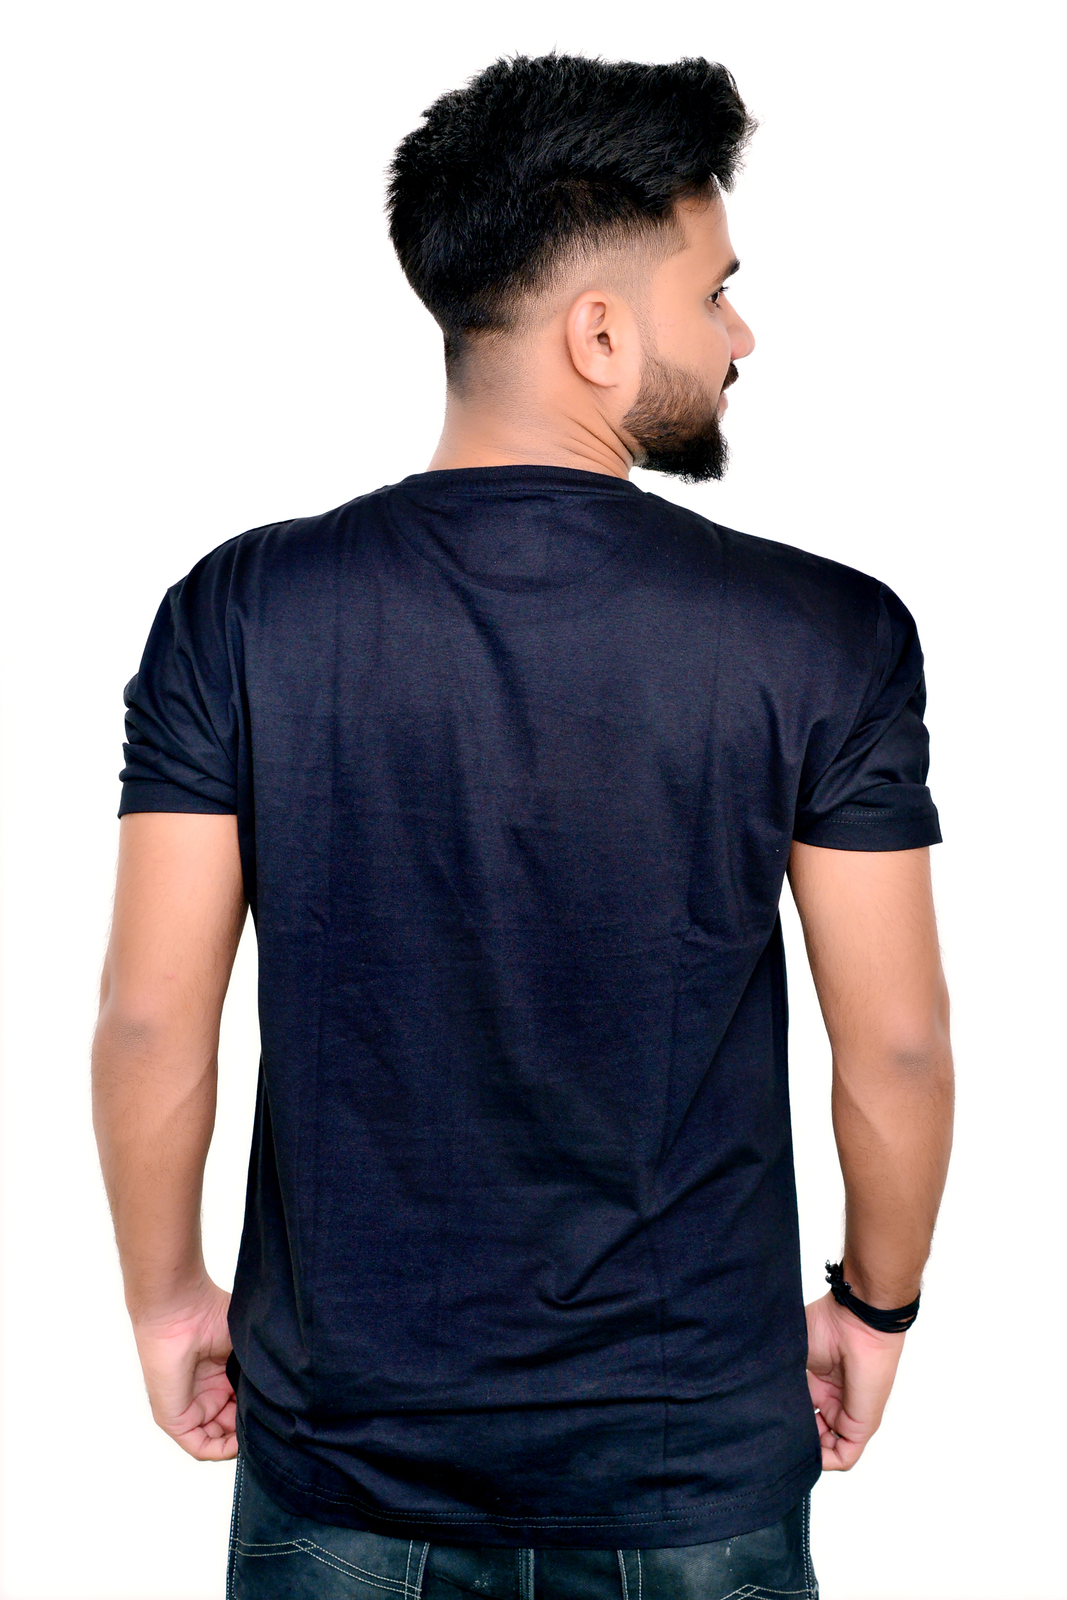 Men Black Pure Cotton T-shirt By BLACKSANDWHITE - M, Black